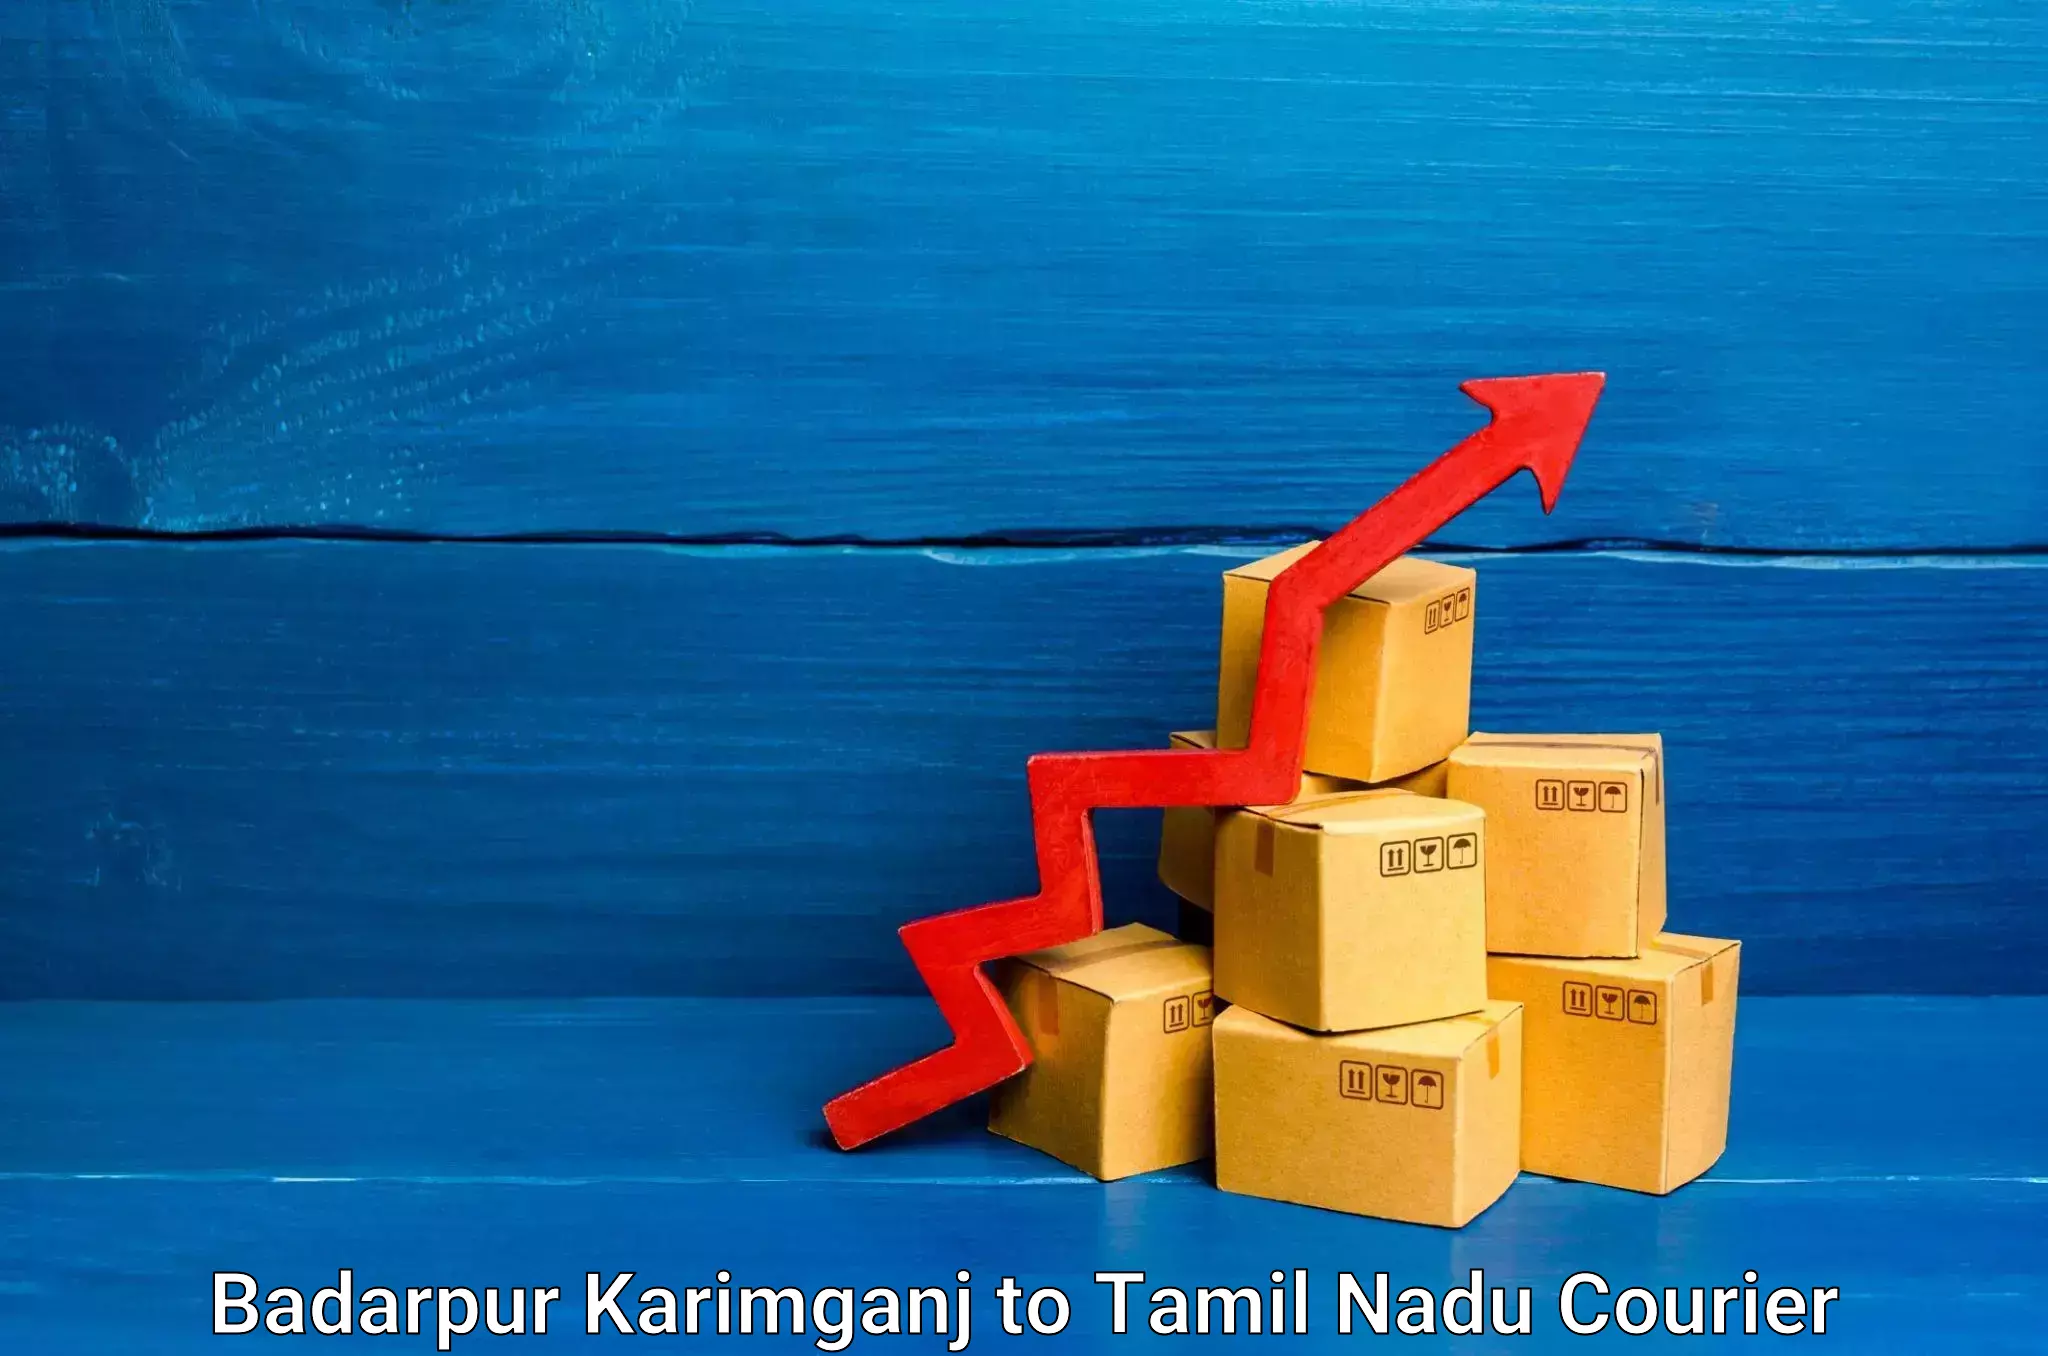 Package delivery network Badarpur Karimganj to Tamil Nadu